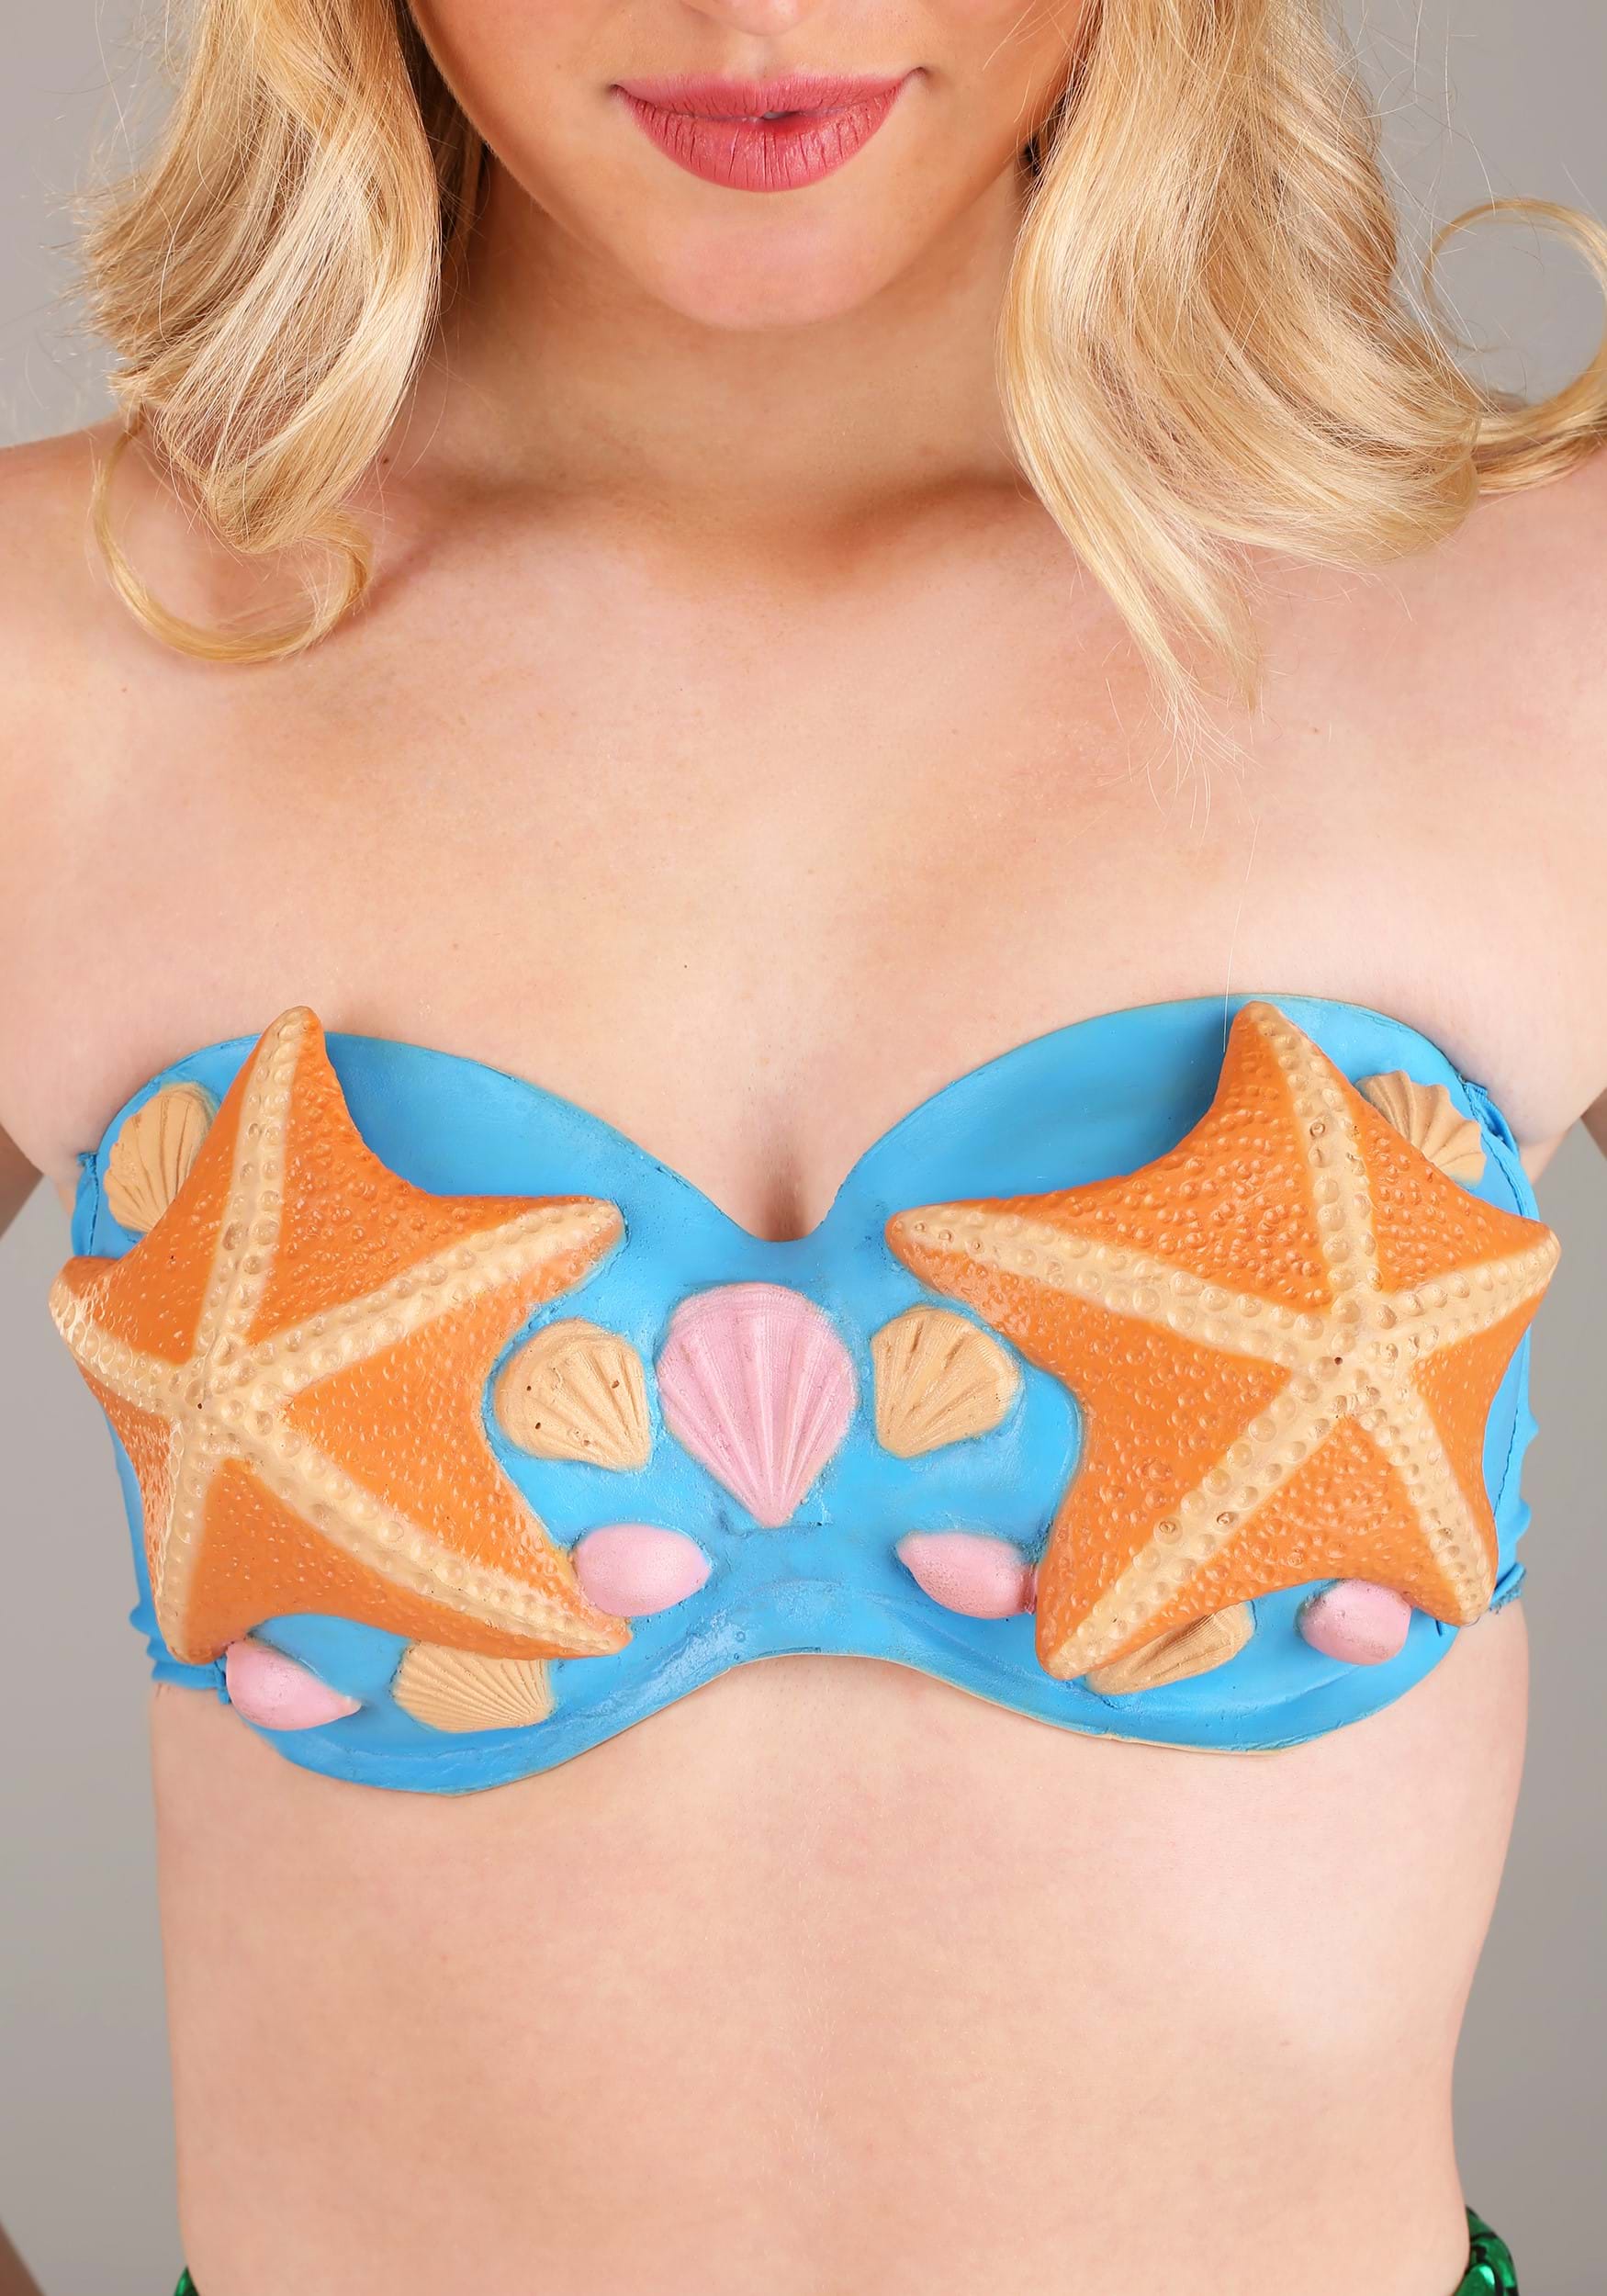 Mermaid Sea Shell Bra Costume Yoga Mat by Riviag Marco - Fine Art